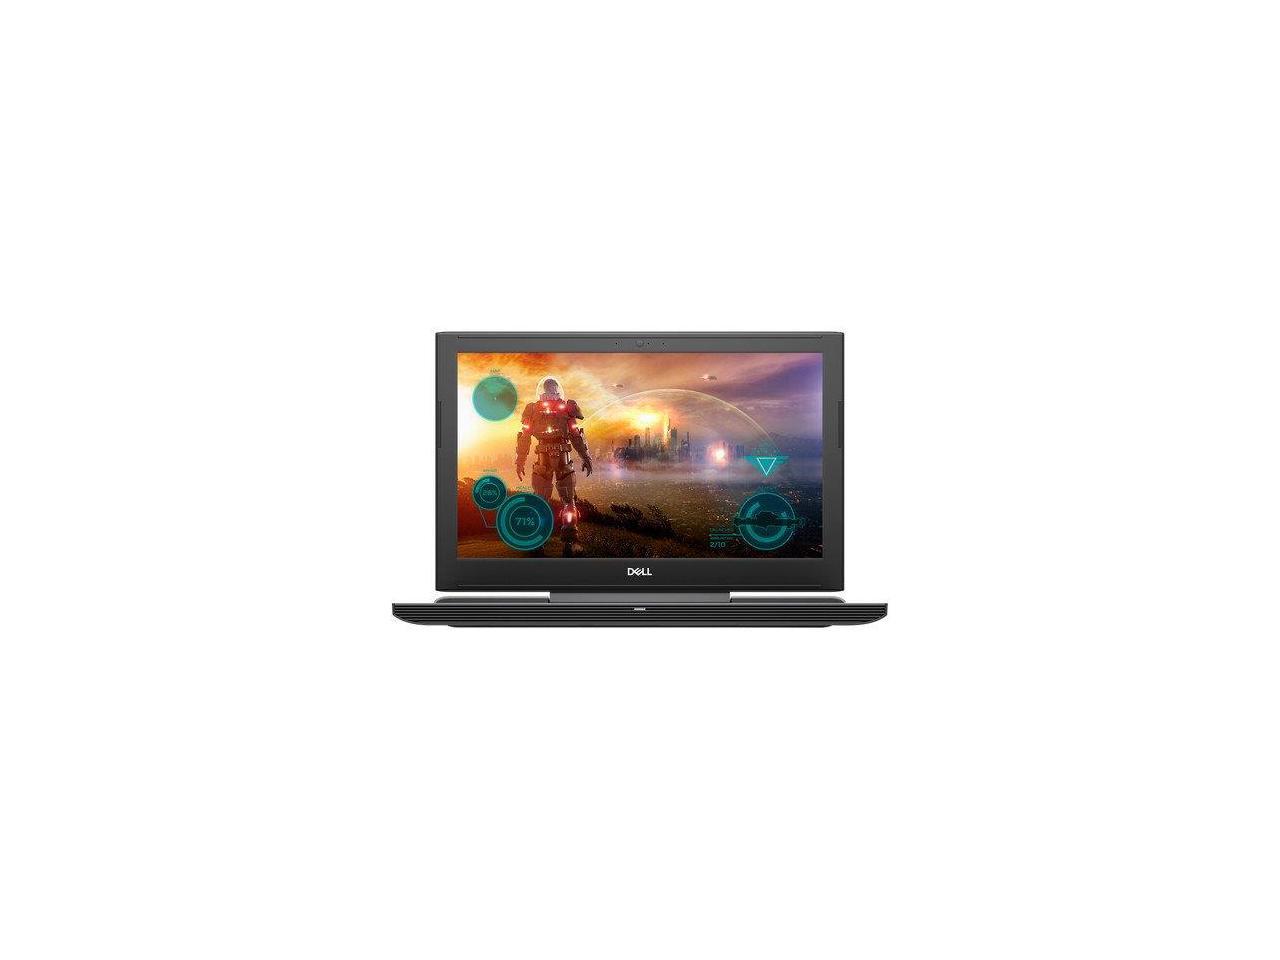 Dell Inspiron 7000 15.6" IPS FHD Gaming Laptop | VR Ready | Intel Quad Core i5-7300HQ | 32GB RAM 128GB SSD 1TB HDD | NVIDIA GeForce GTX 1060 6GB GDDR5 | Windows 10 Black